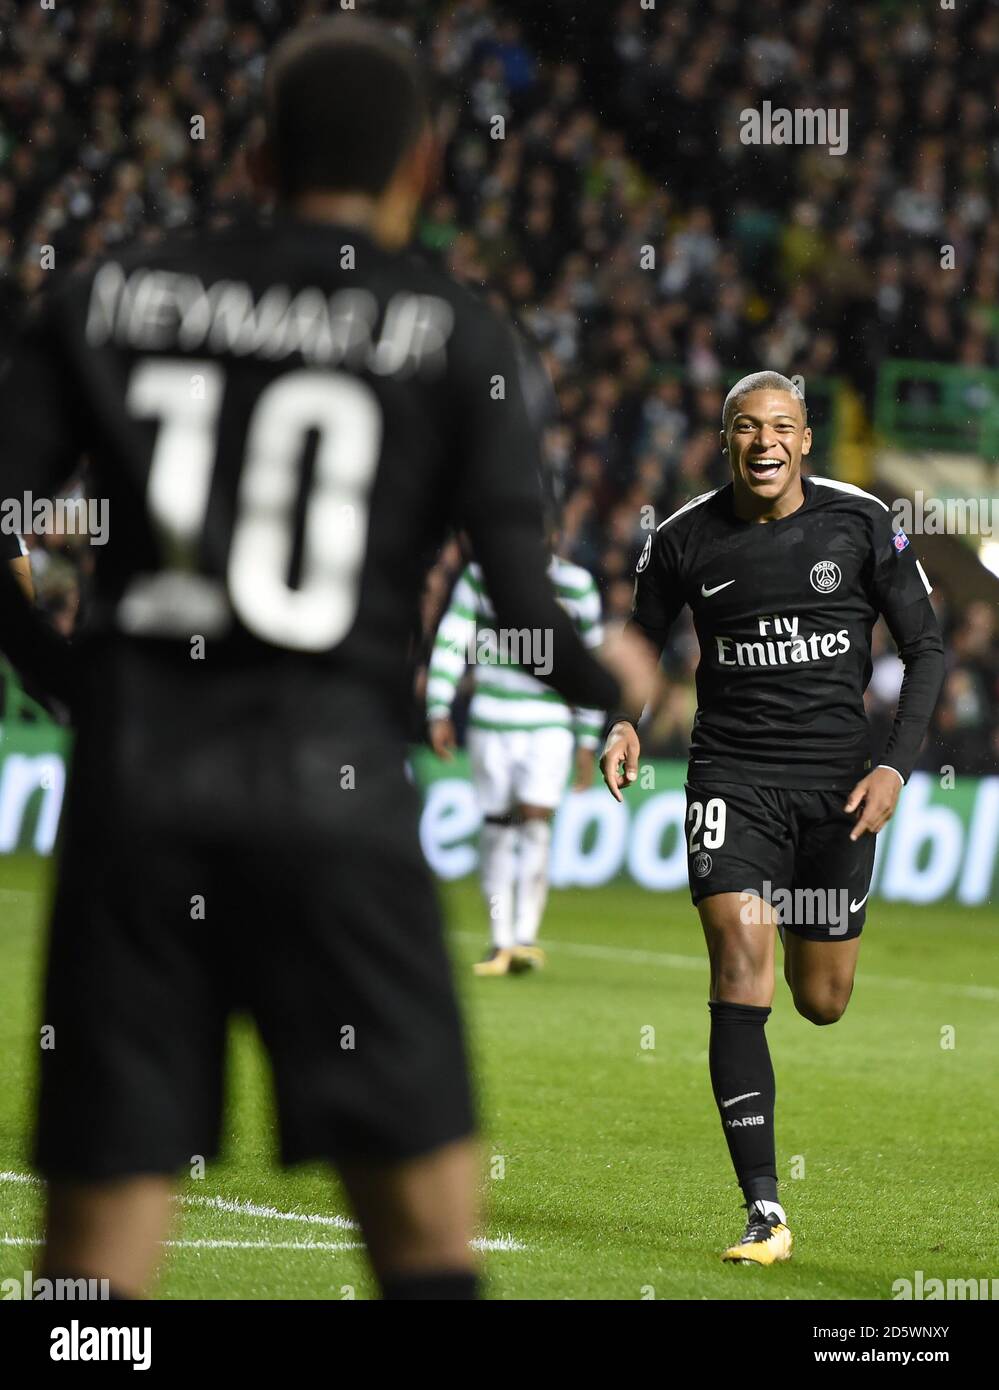 Paris Saint Germain S Kylian Mbappe Runs To Neymar To Celebrate After Scoring The Second Goal Stock Photo Alamy